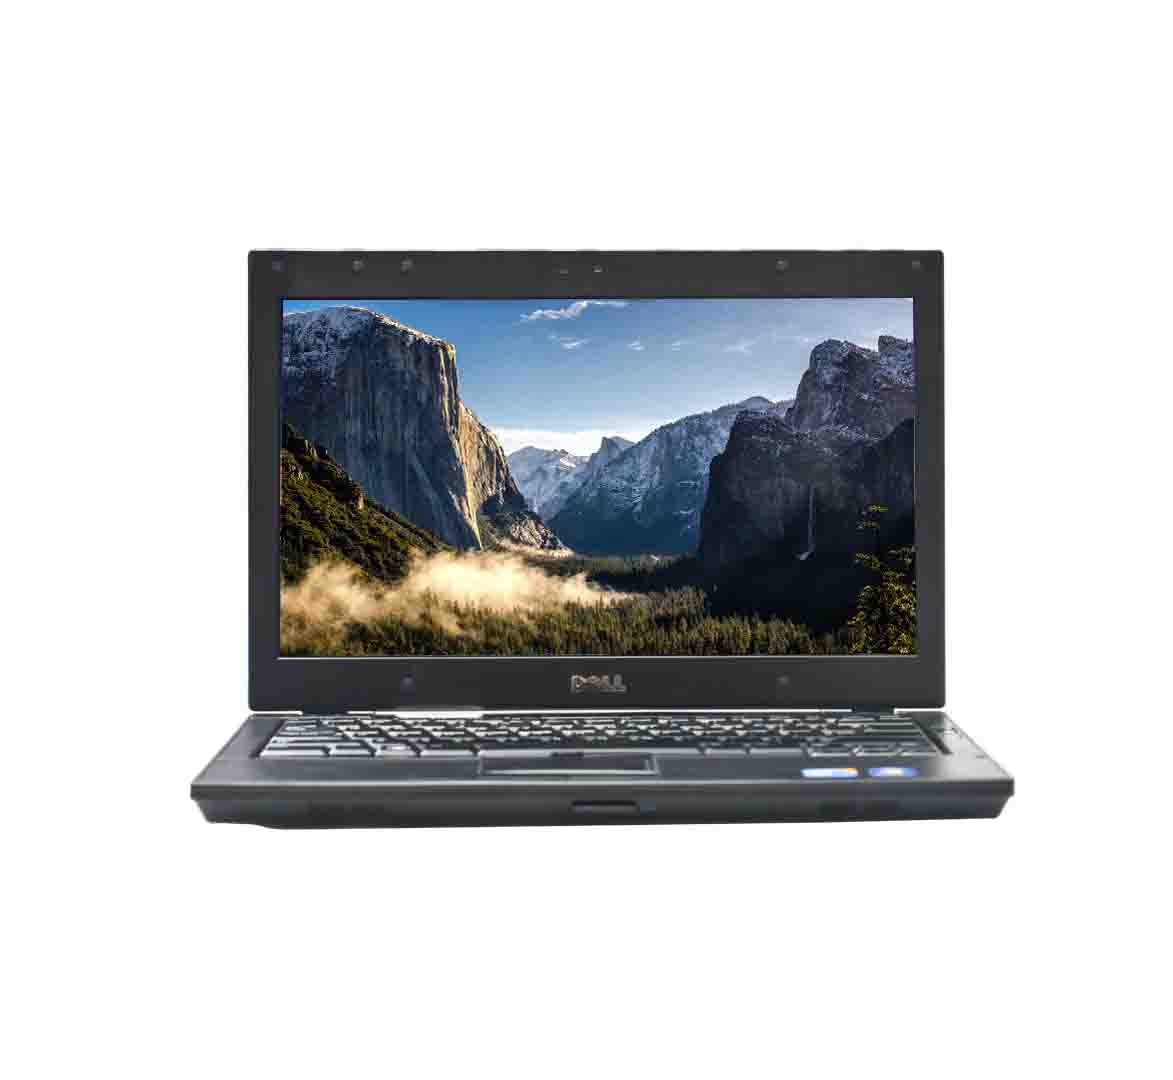 Dell Latitude E4310 Business Laptop, Intel Core i5-M Series CPU, 4GB RAM, 500GB HDD, 13.3 inch Display, Windows 10 Pro, Refurbished Laptop